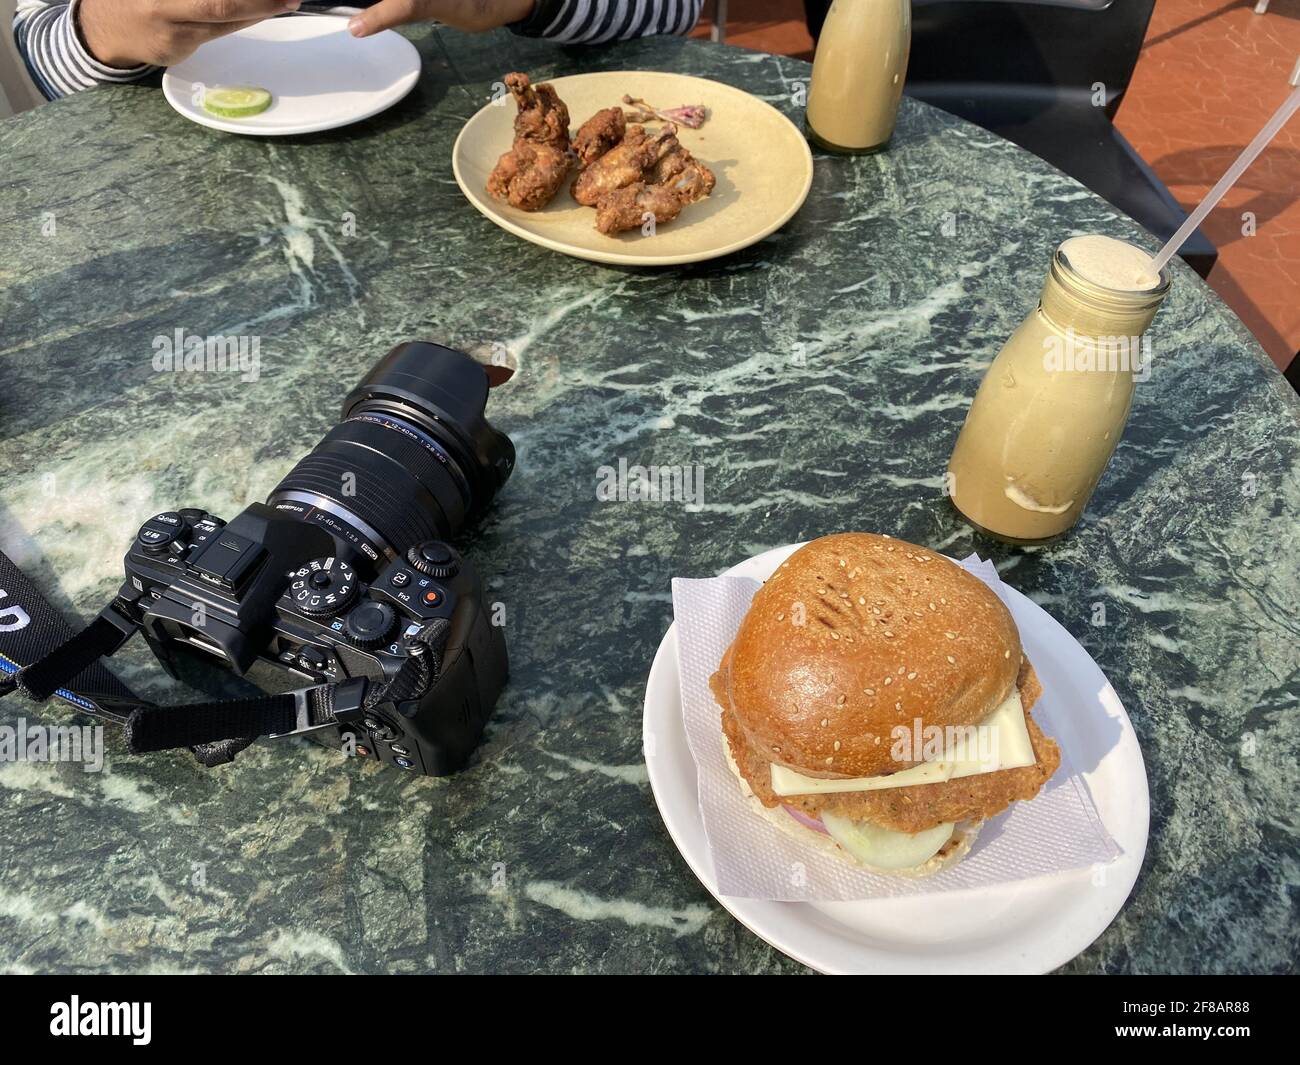 DARJEELING, INDIA - Apr 12, 2021: Burger and chicken pakora with camera at table top Stock Photo